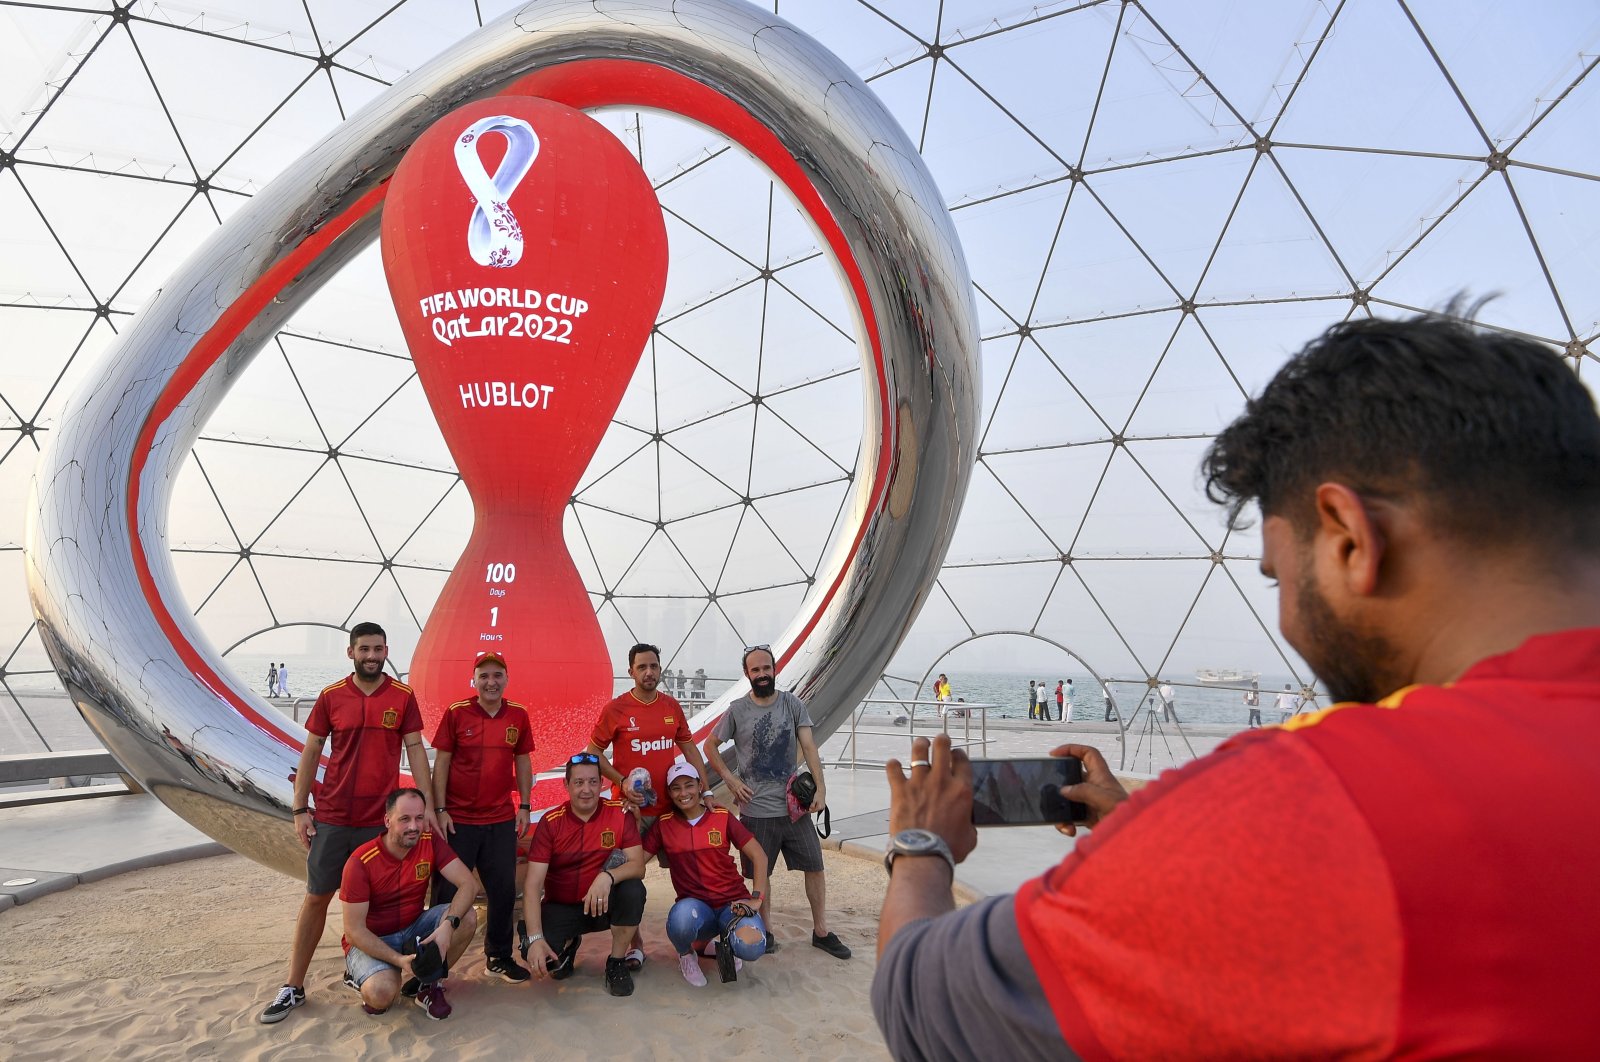 Football fans pose in front of the Qatar 2022 FIFA World Cup countdown clock, Doha, Qatar, Aug. 12, 2022. (EPA Photo)